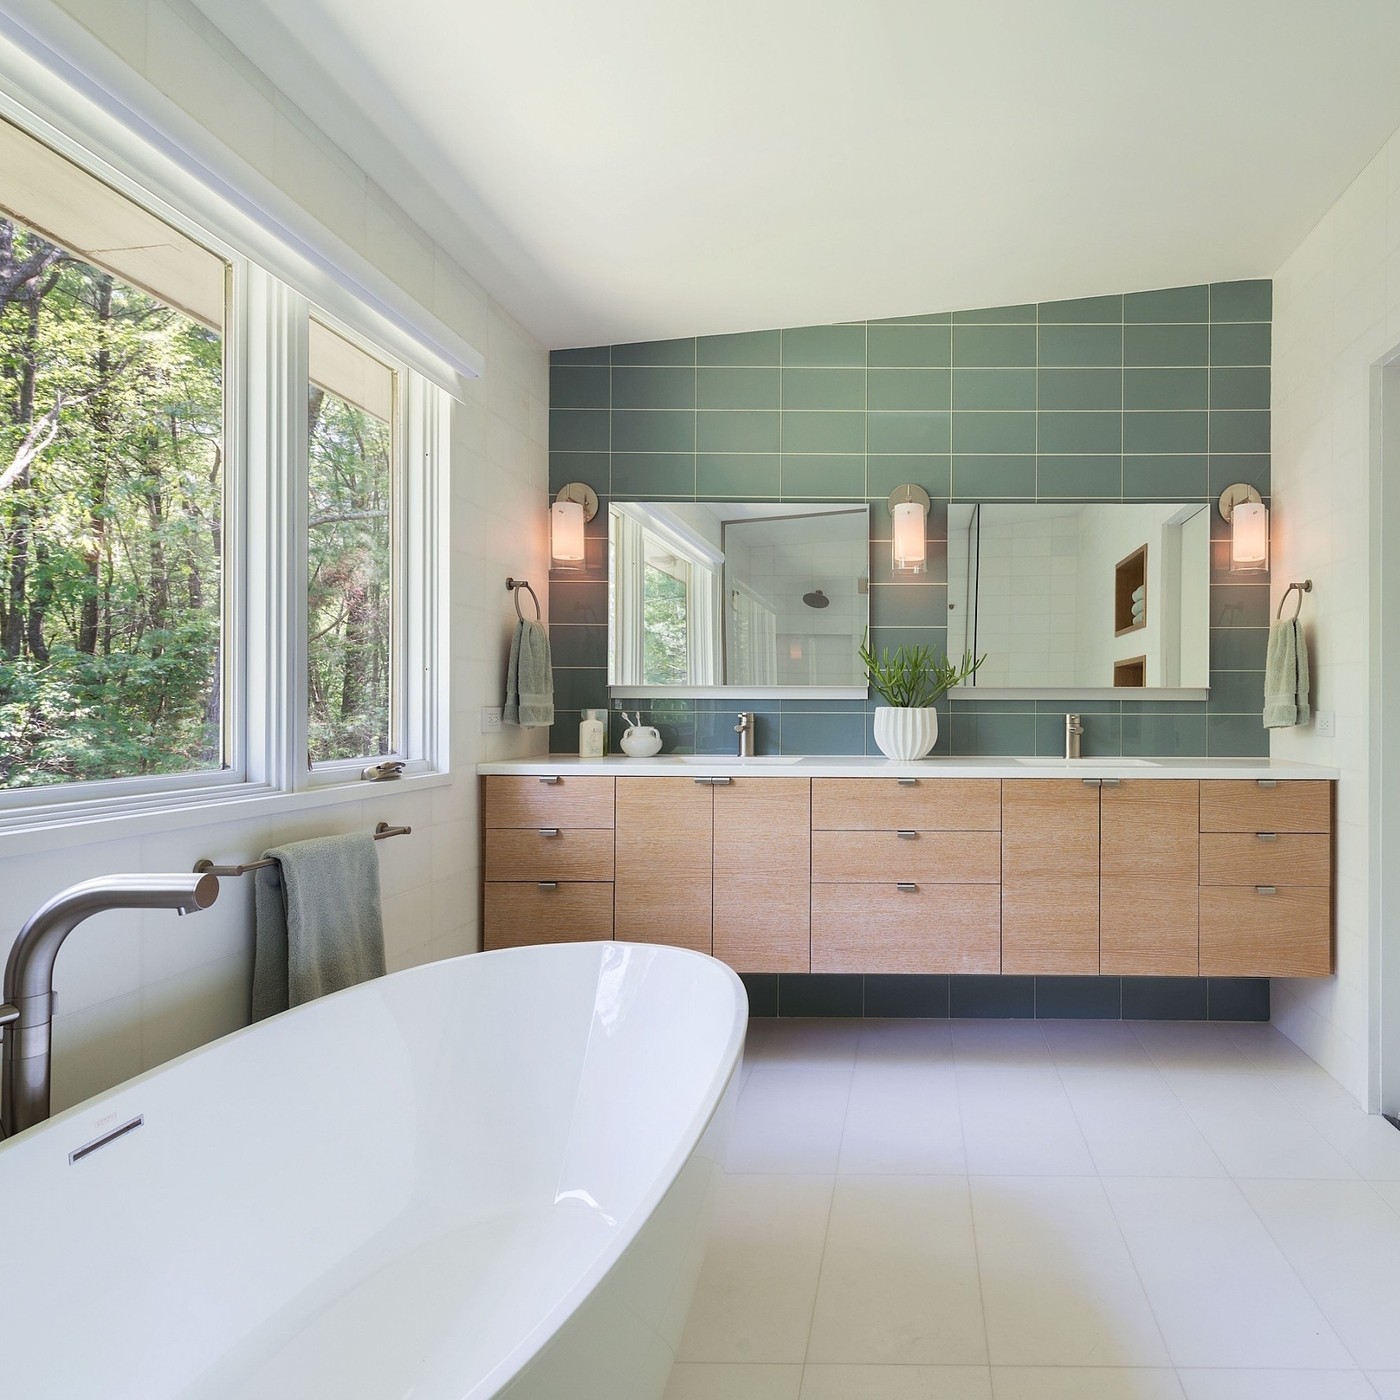 green-tile-in-spacious-white-bathroom.jpg